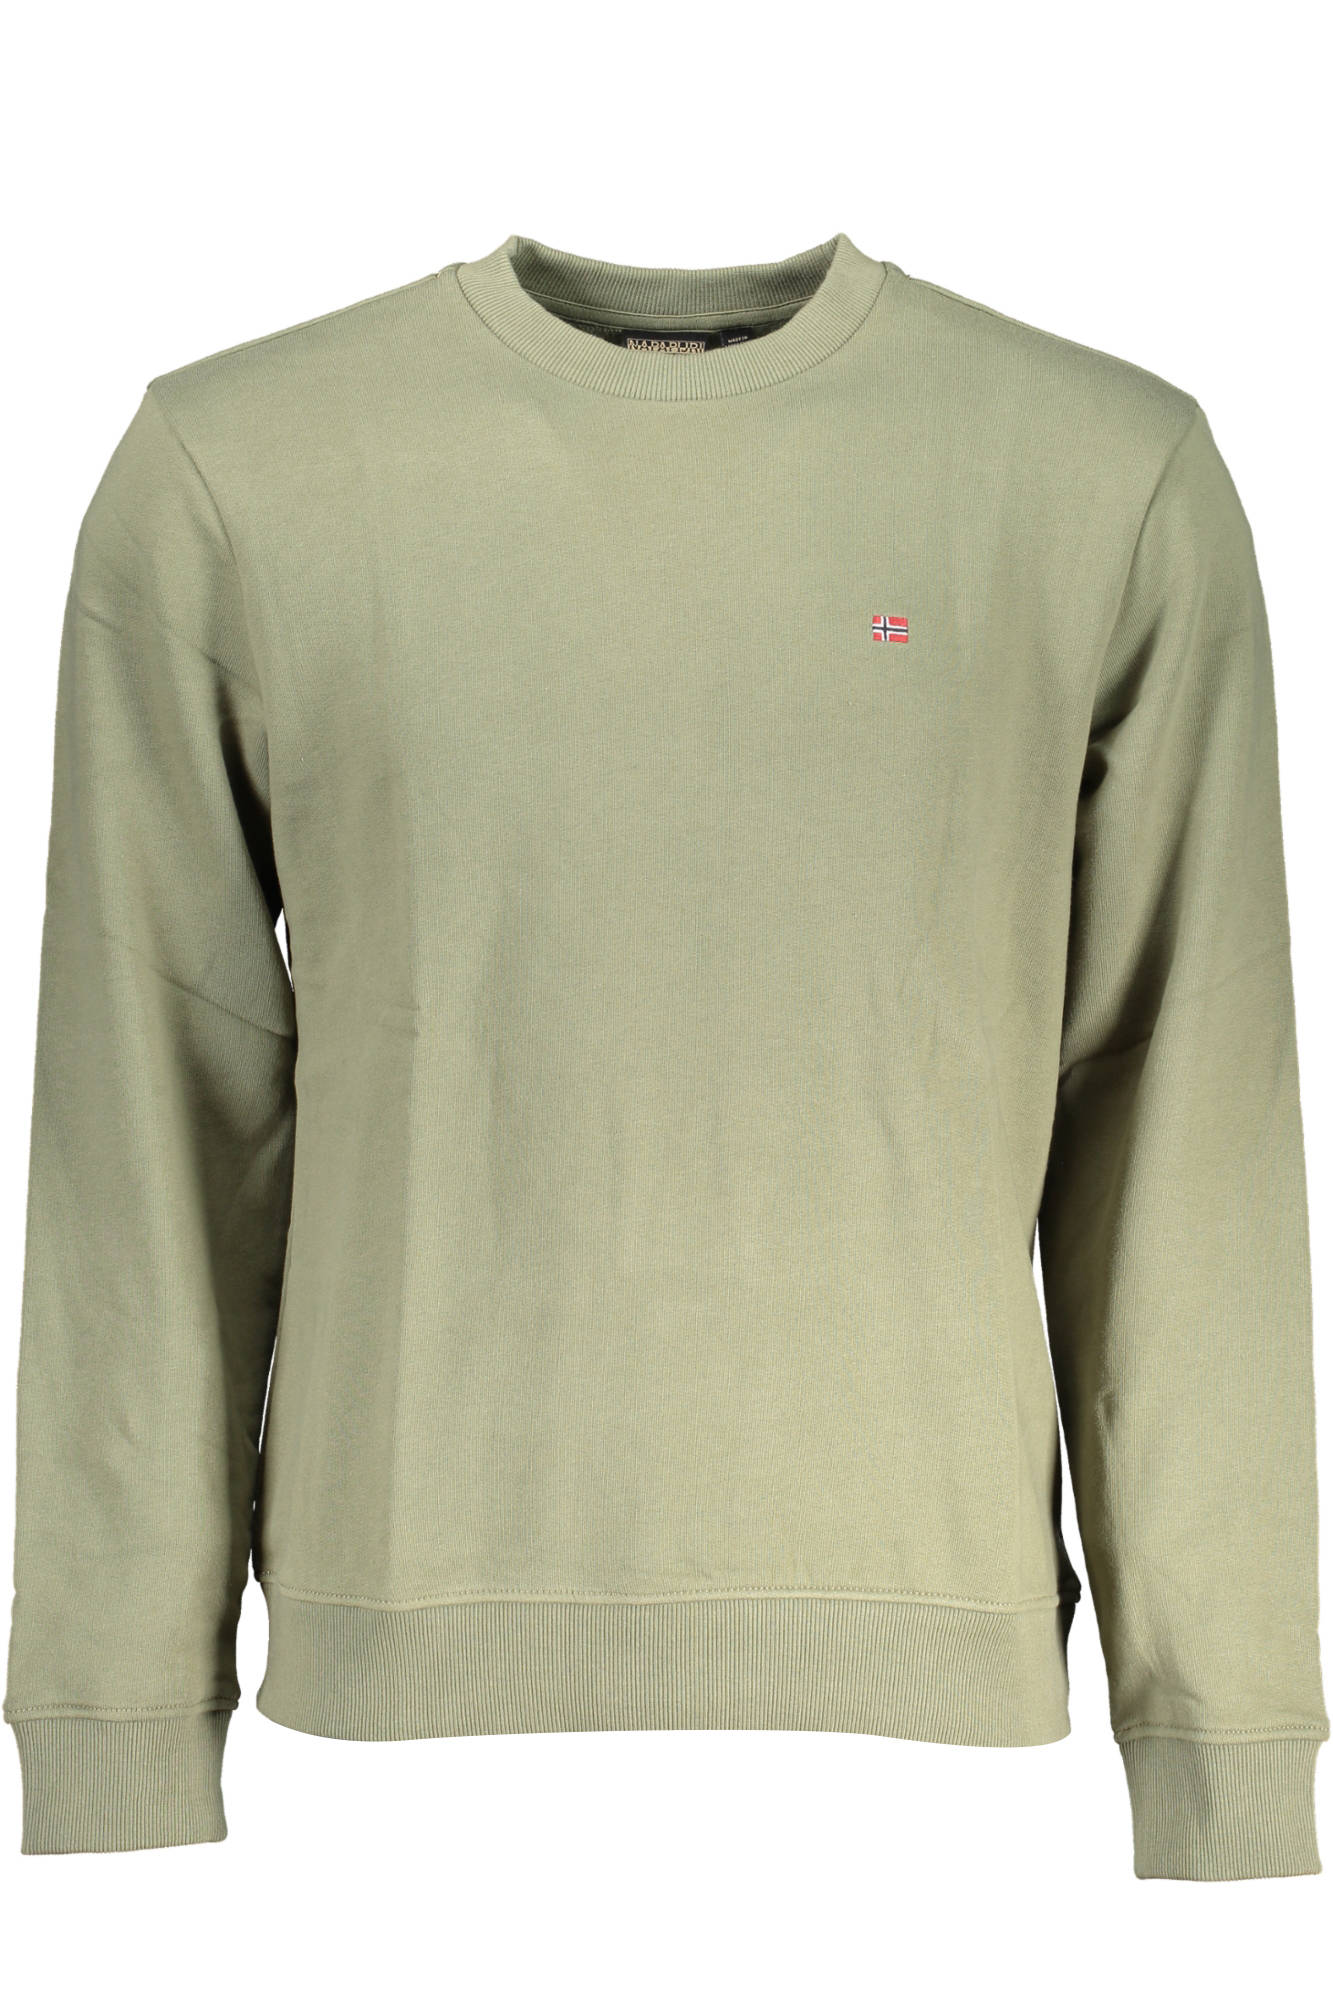 Napapijri Green Cotton Sweater - Fizigo